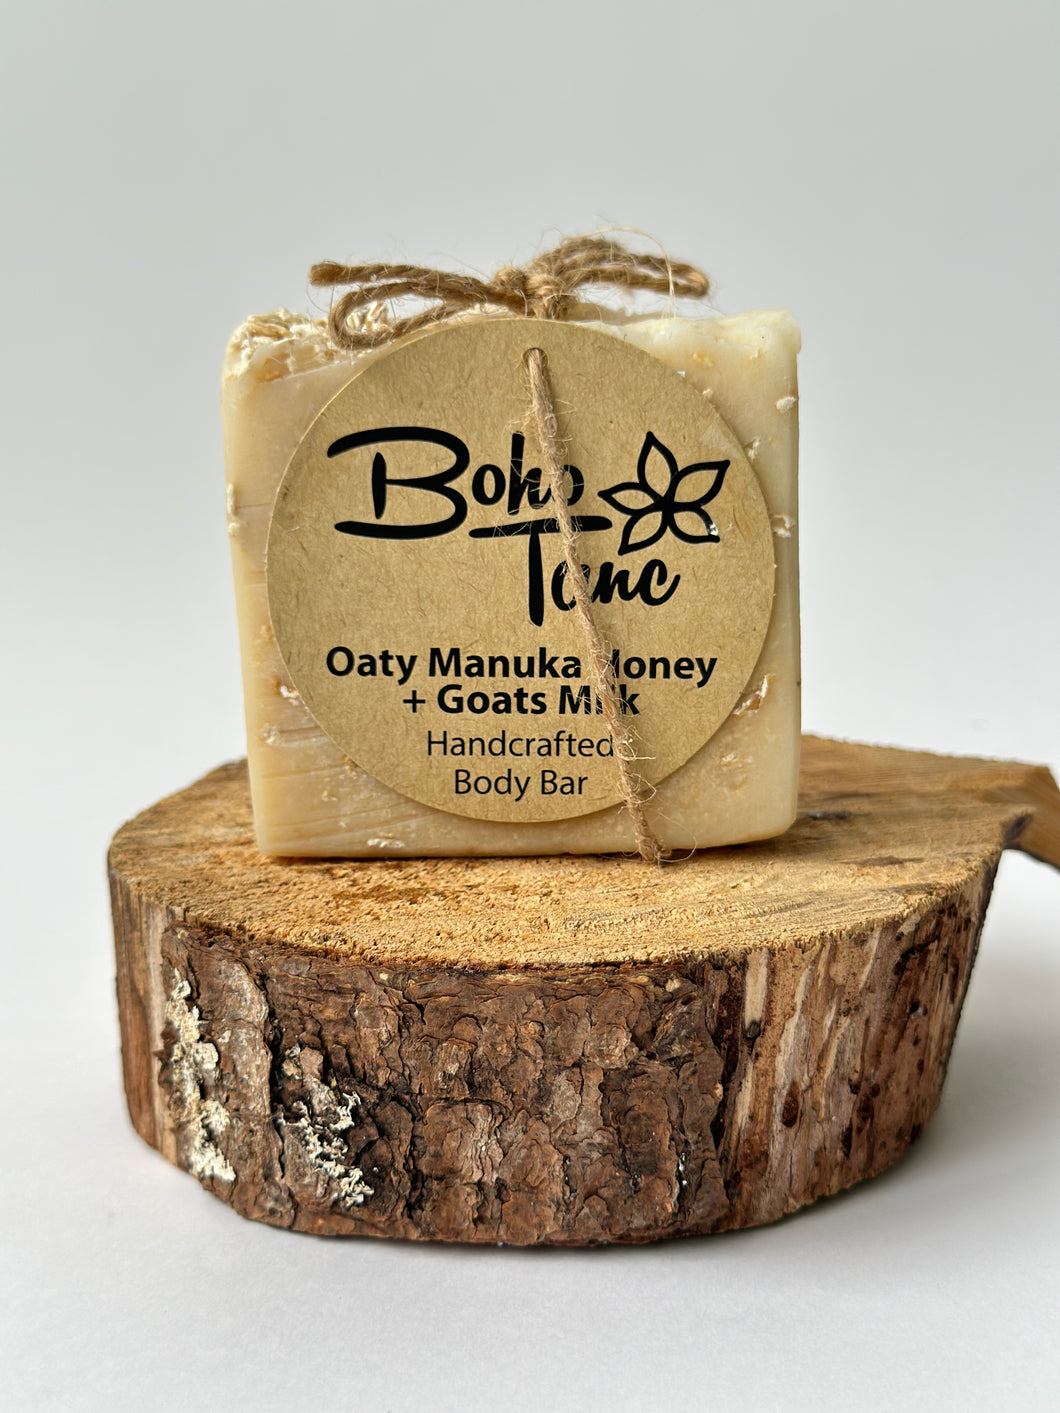 Oaty Manuka Honey + Goats Milk Body Bar